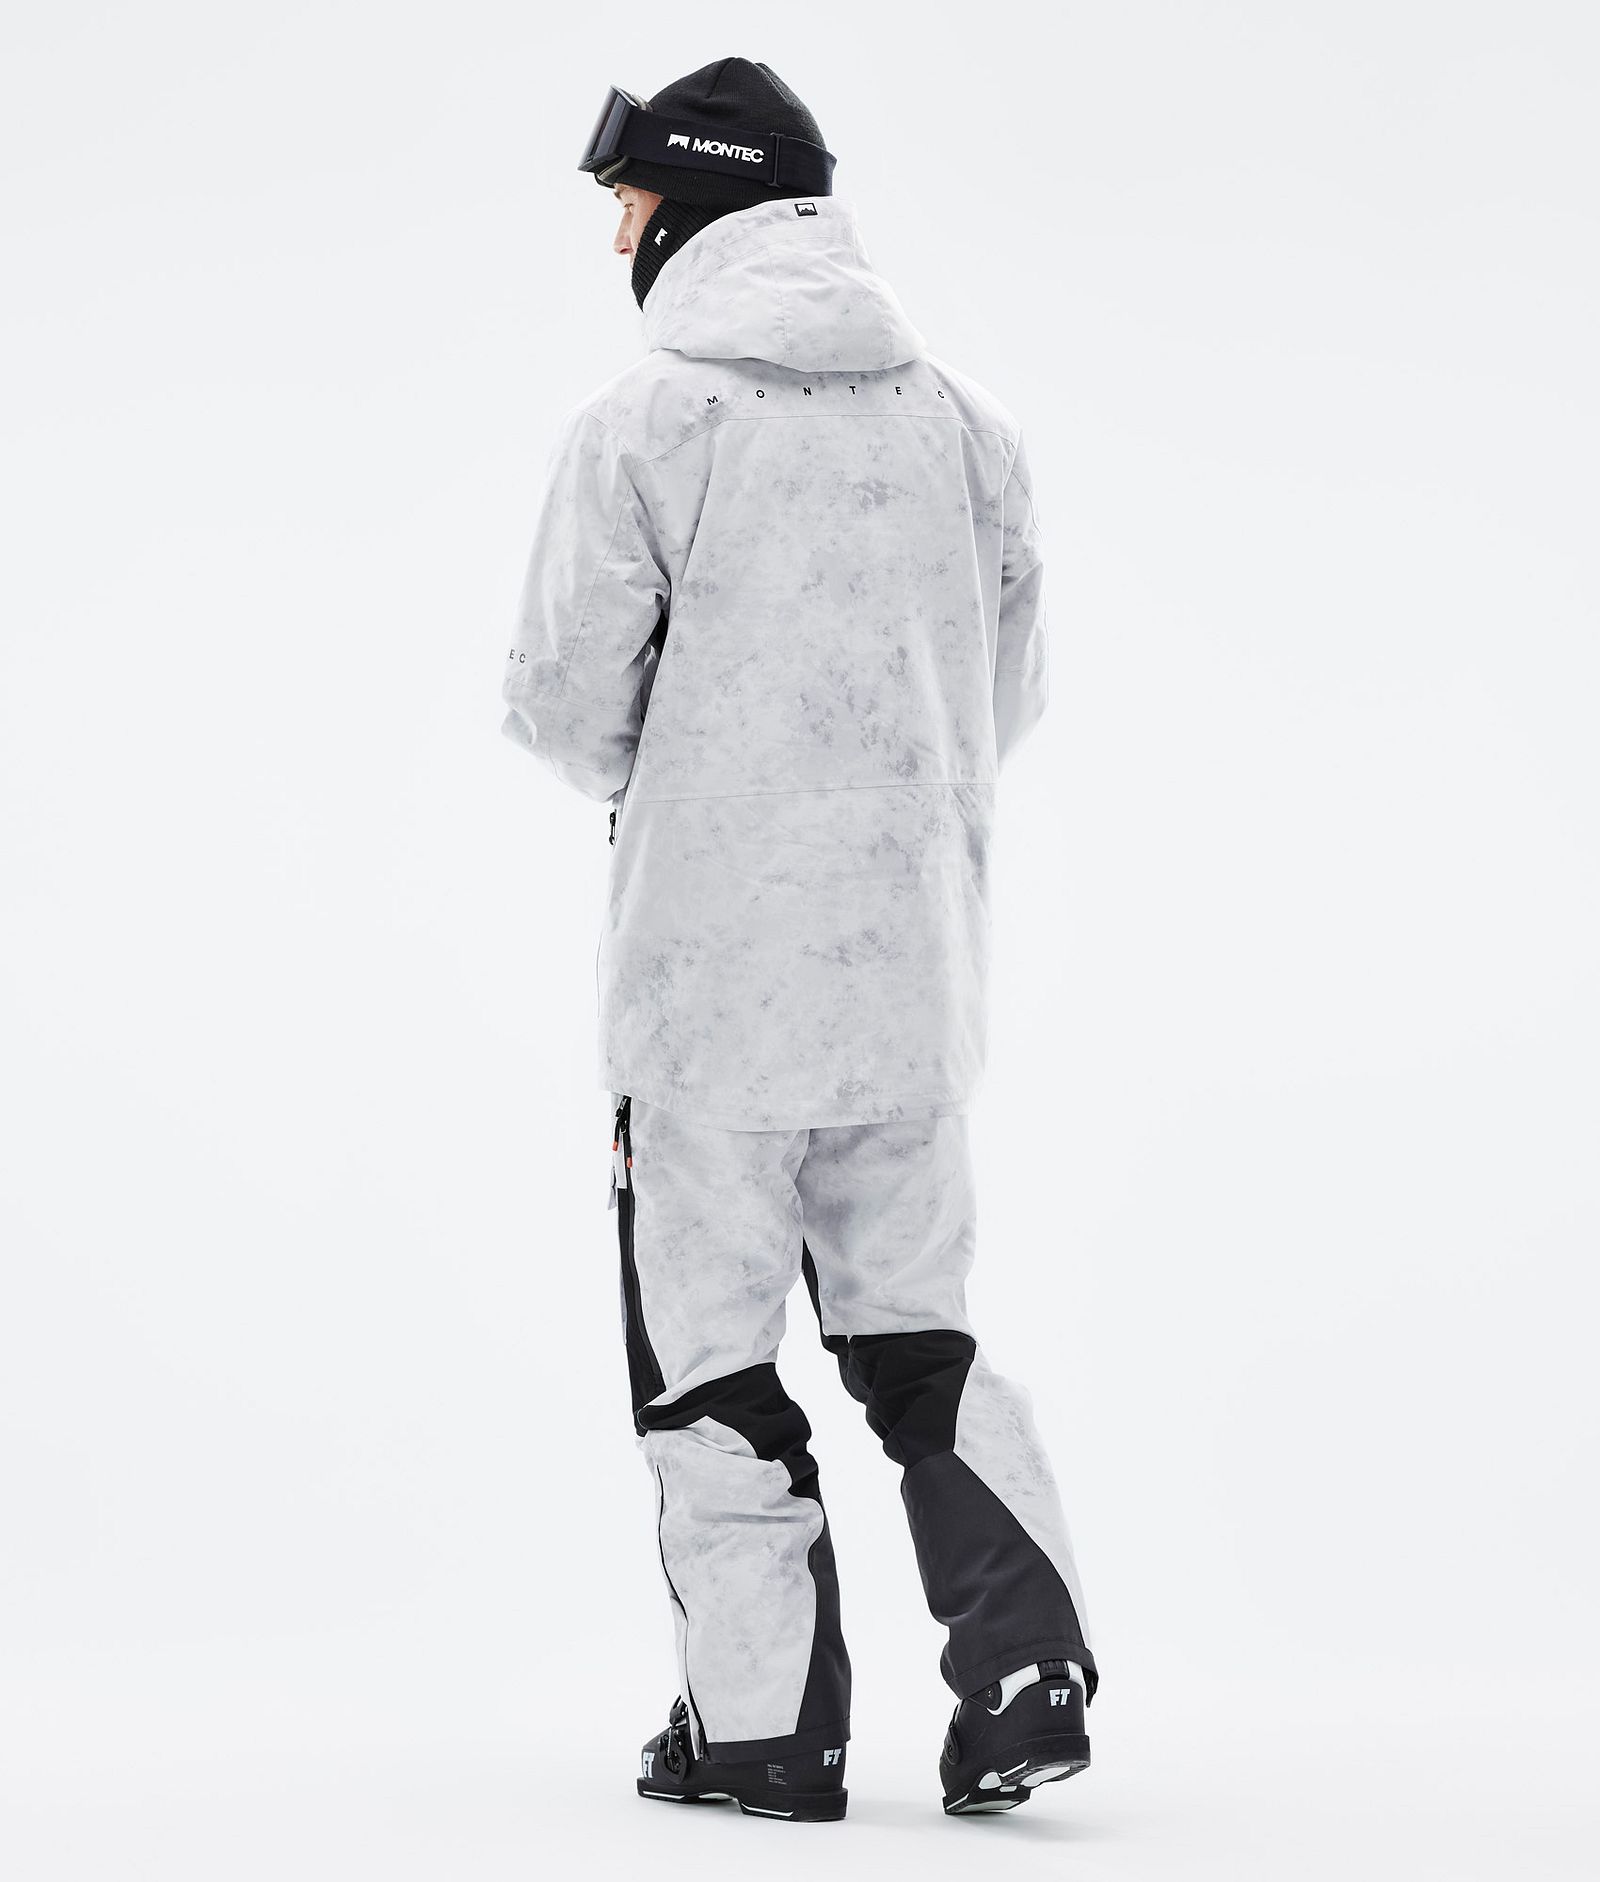 CHILLWHITE Waterproof Ice-Cream Ski&Snowboard Jacket: Stylish and